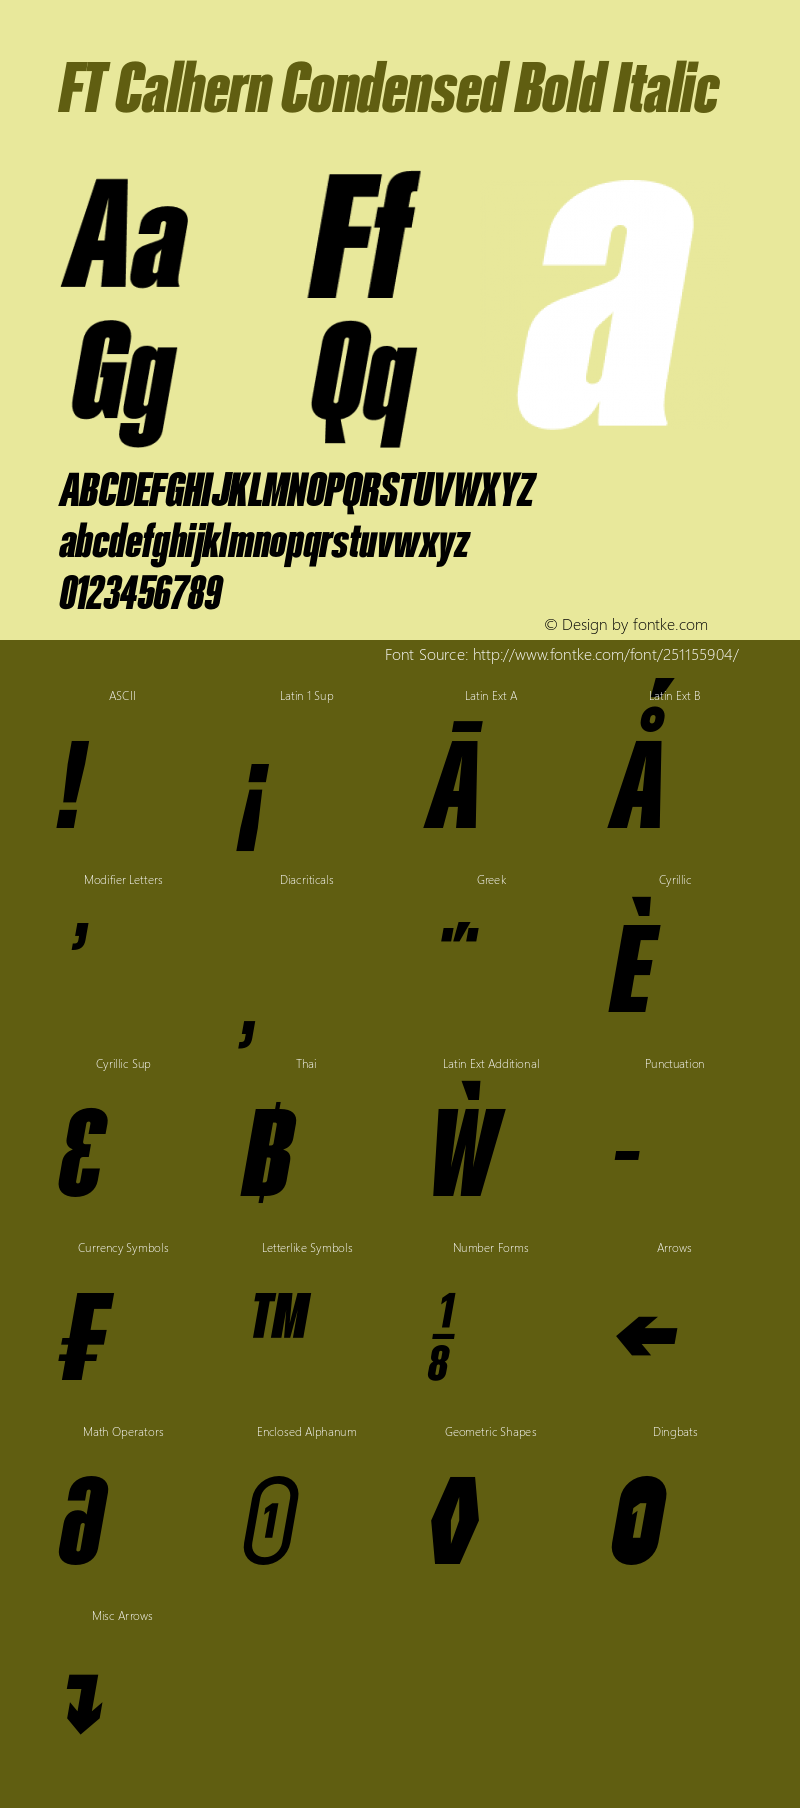 FT Calhern Condensed Bold Italic Version 1.001;Glyphs 3.1.2 (3151)图片样张